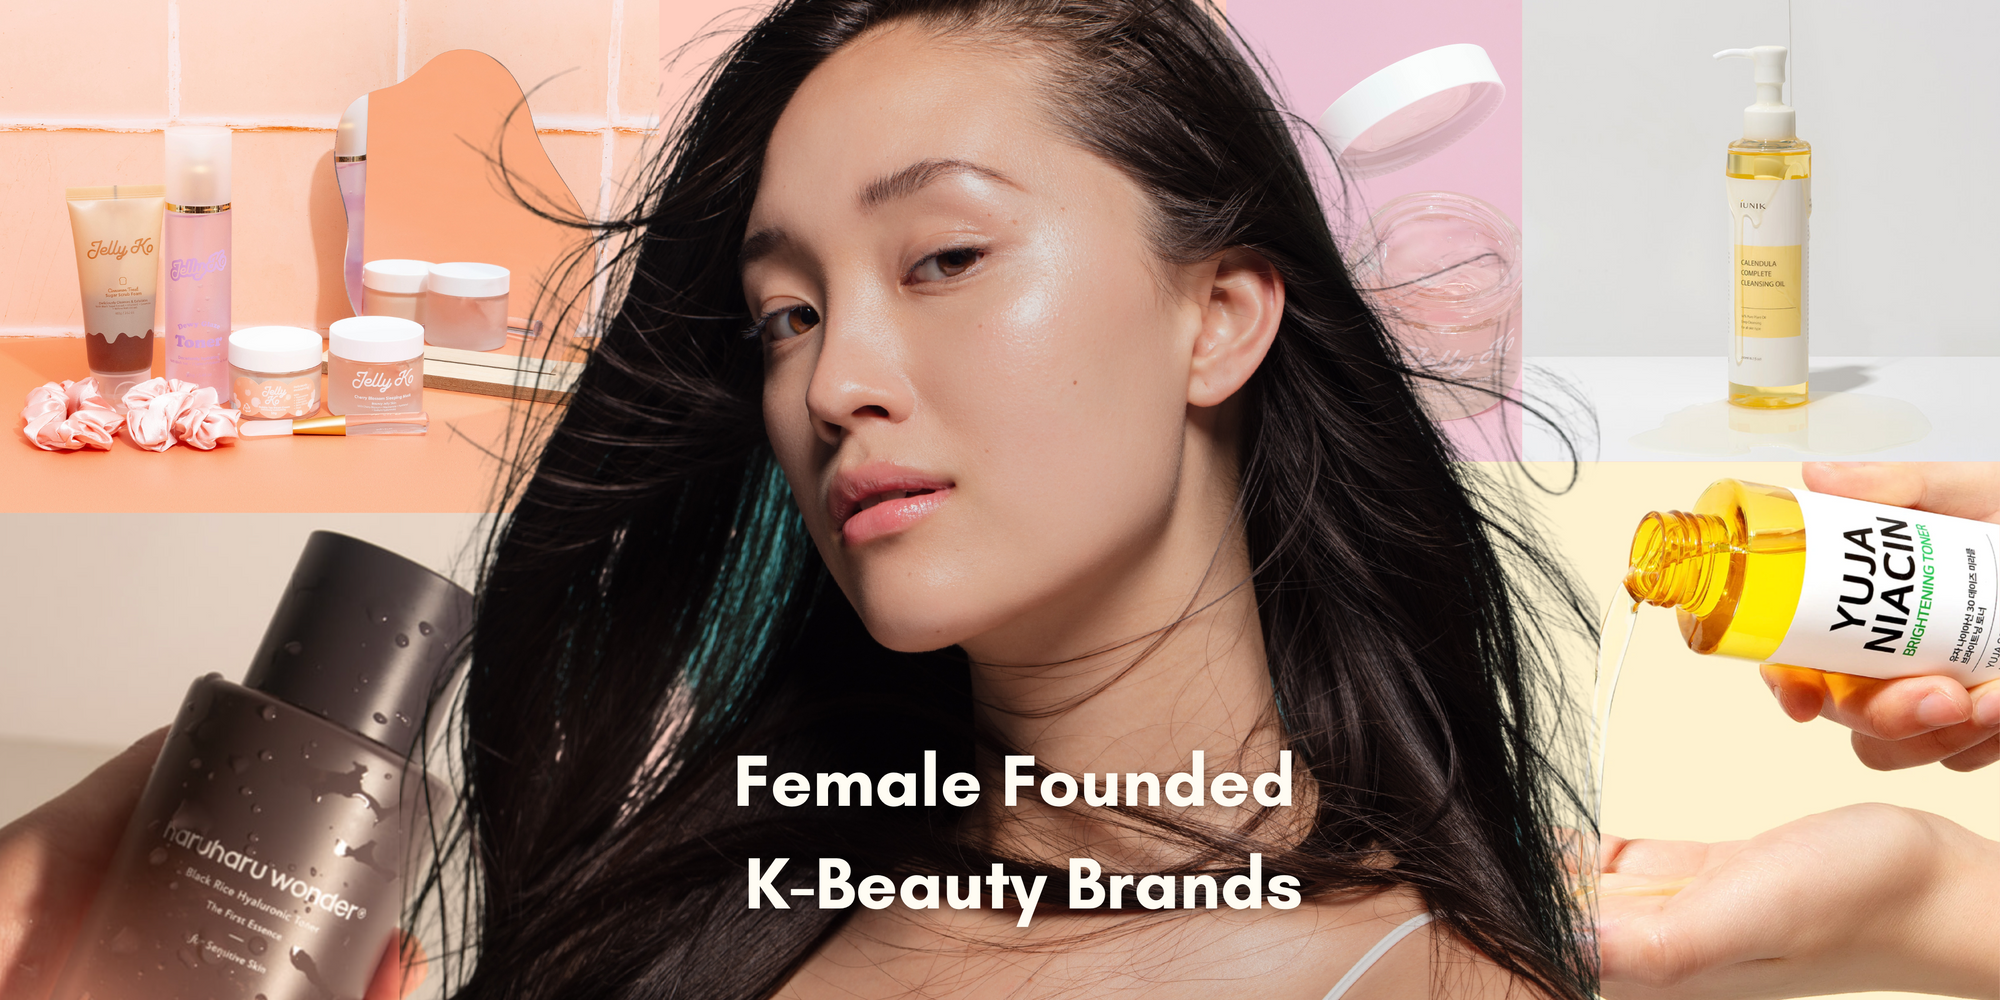 Female Founded K-Beauty Brands